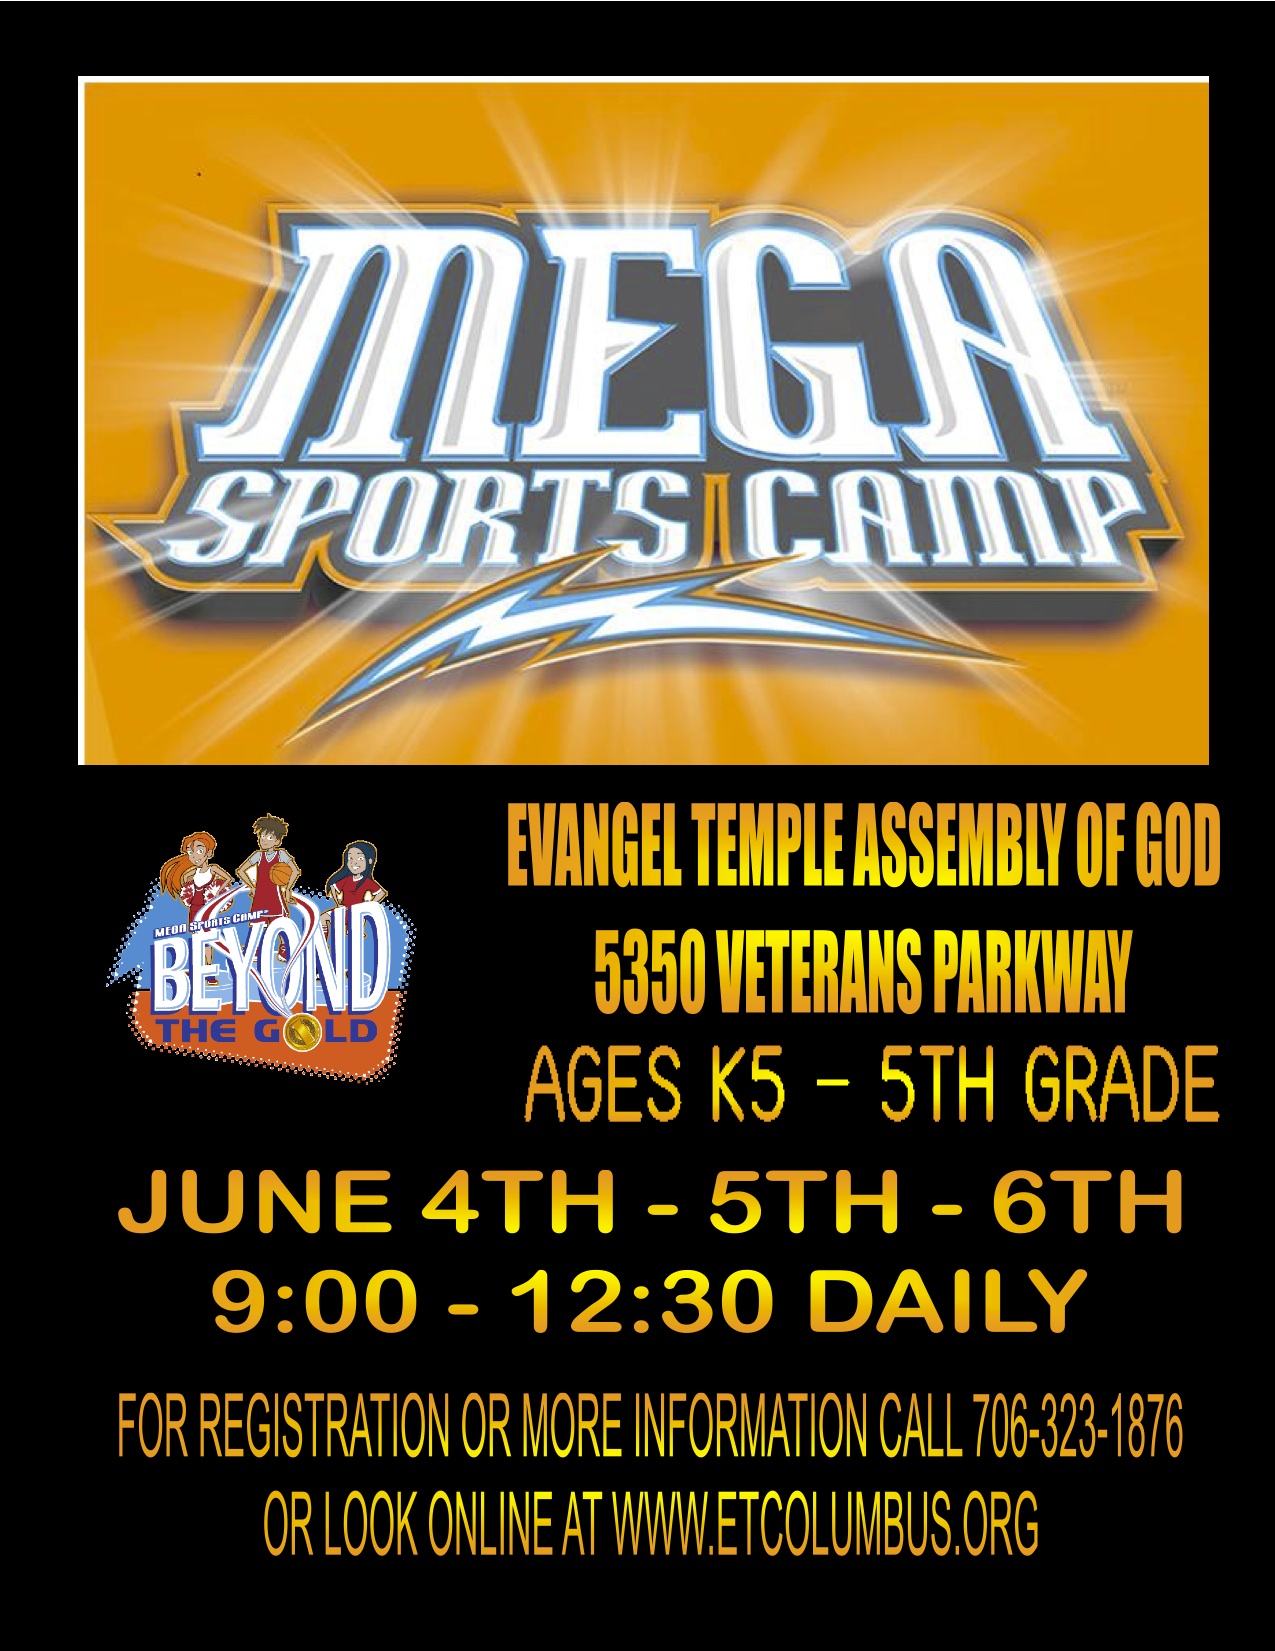 Evangel Temple’s Mega Sports Camp